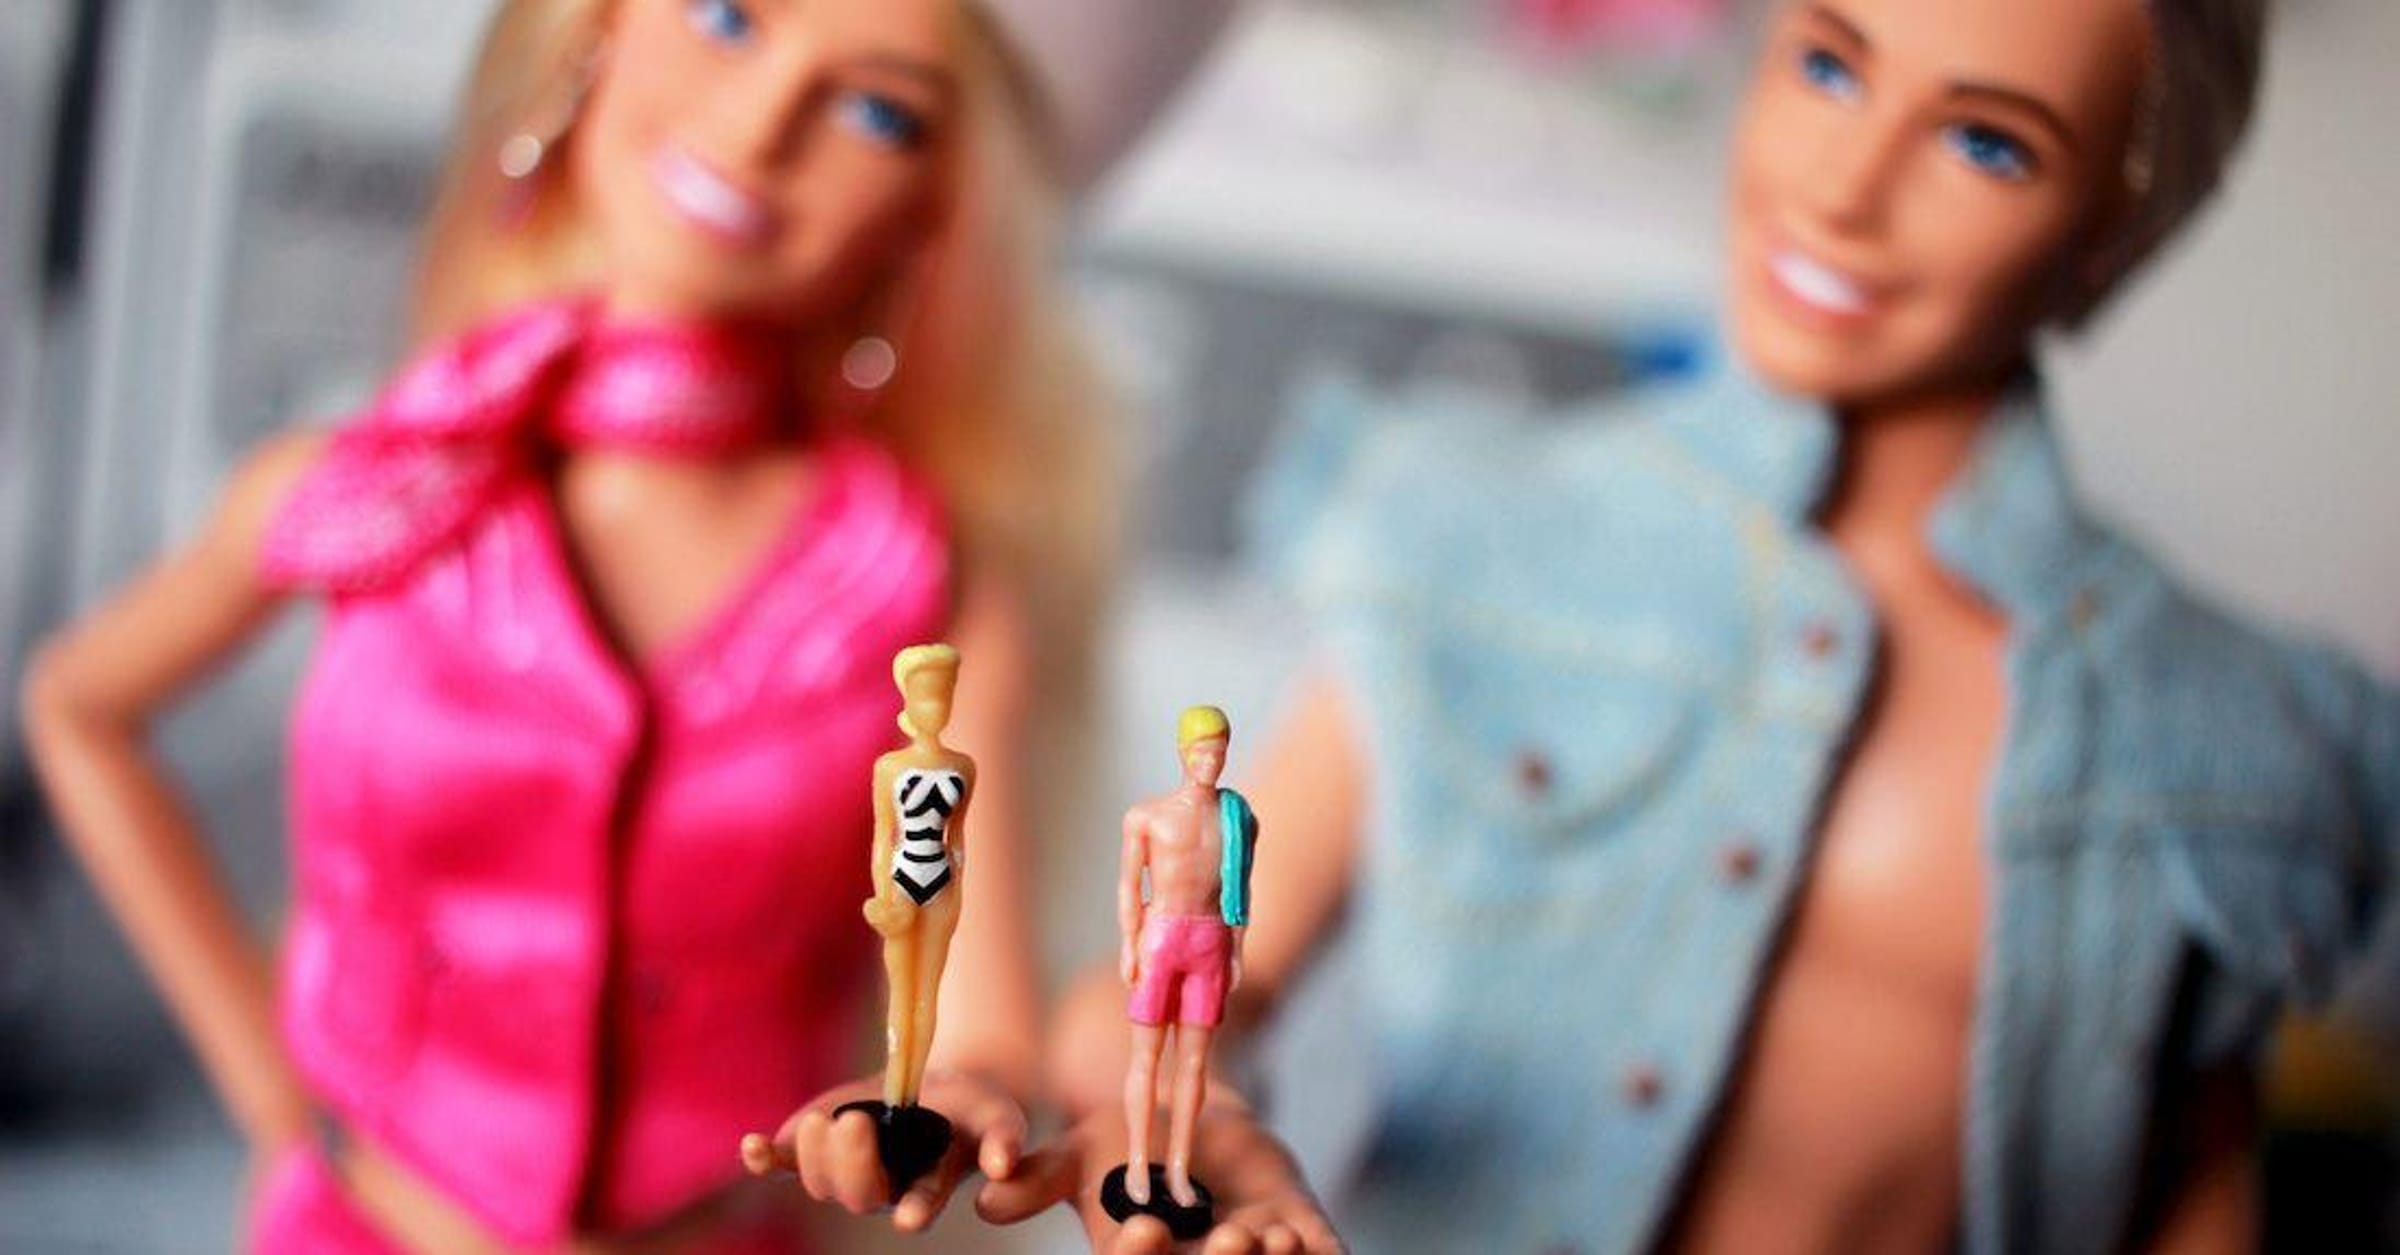 Justice for Barbie's Allan, Ken's forgotten, better dressed buddy